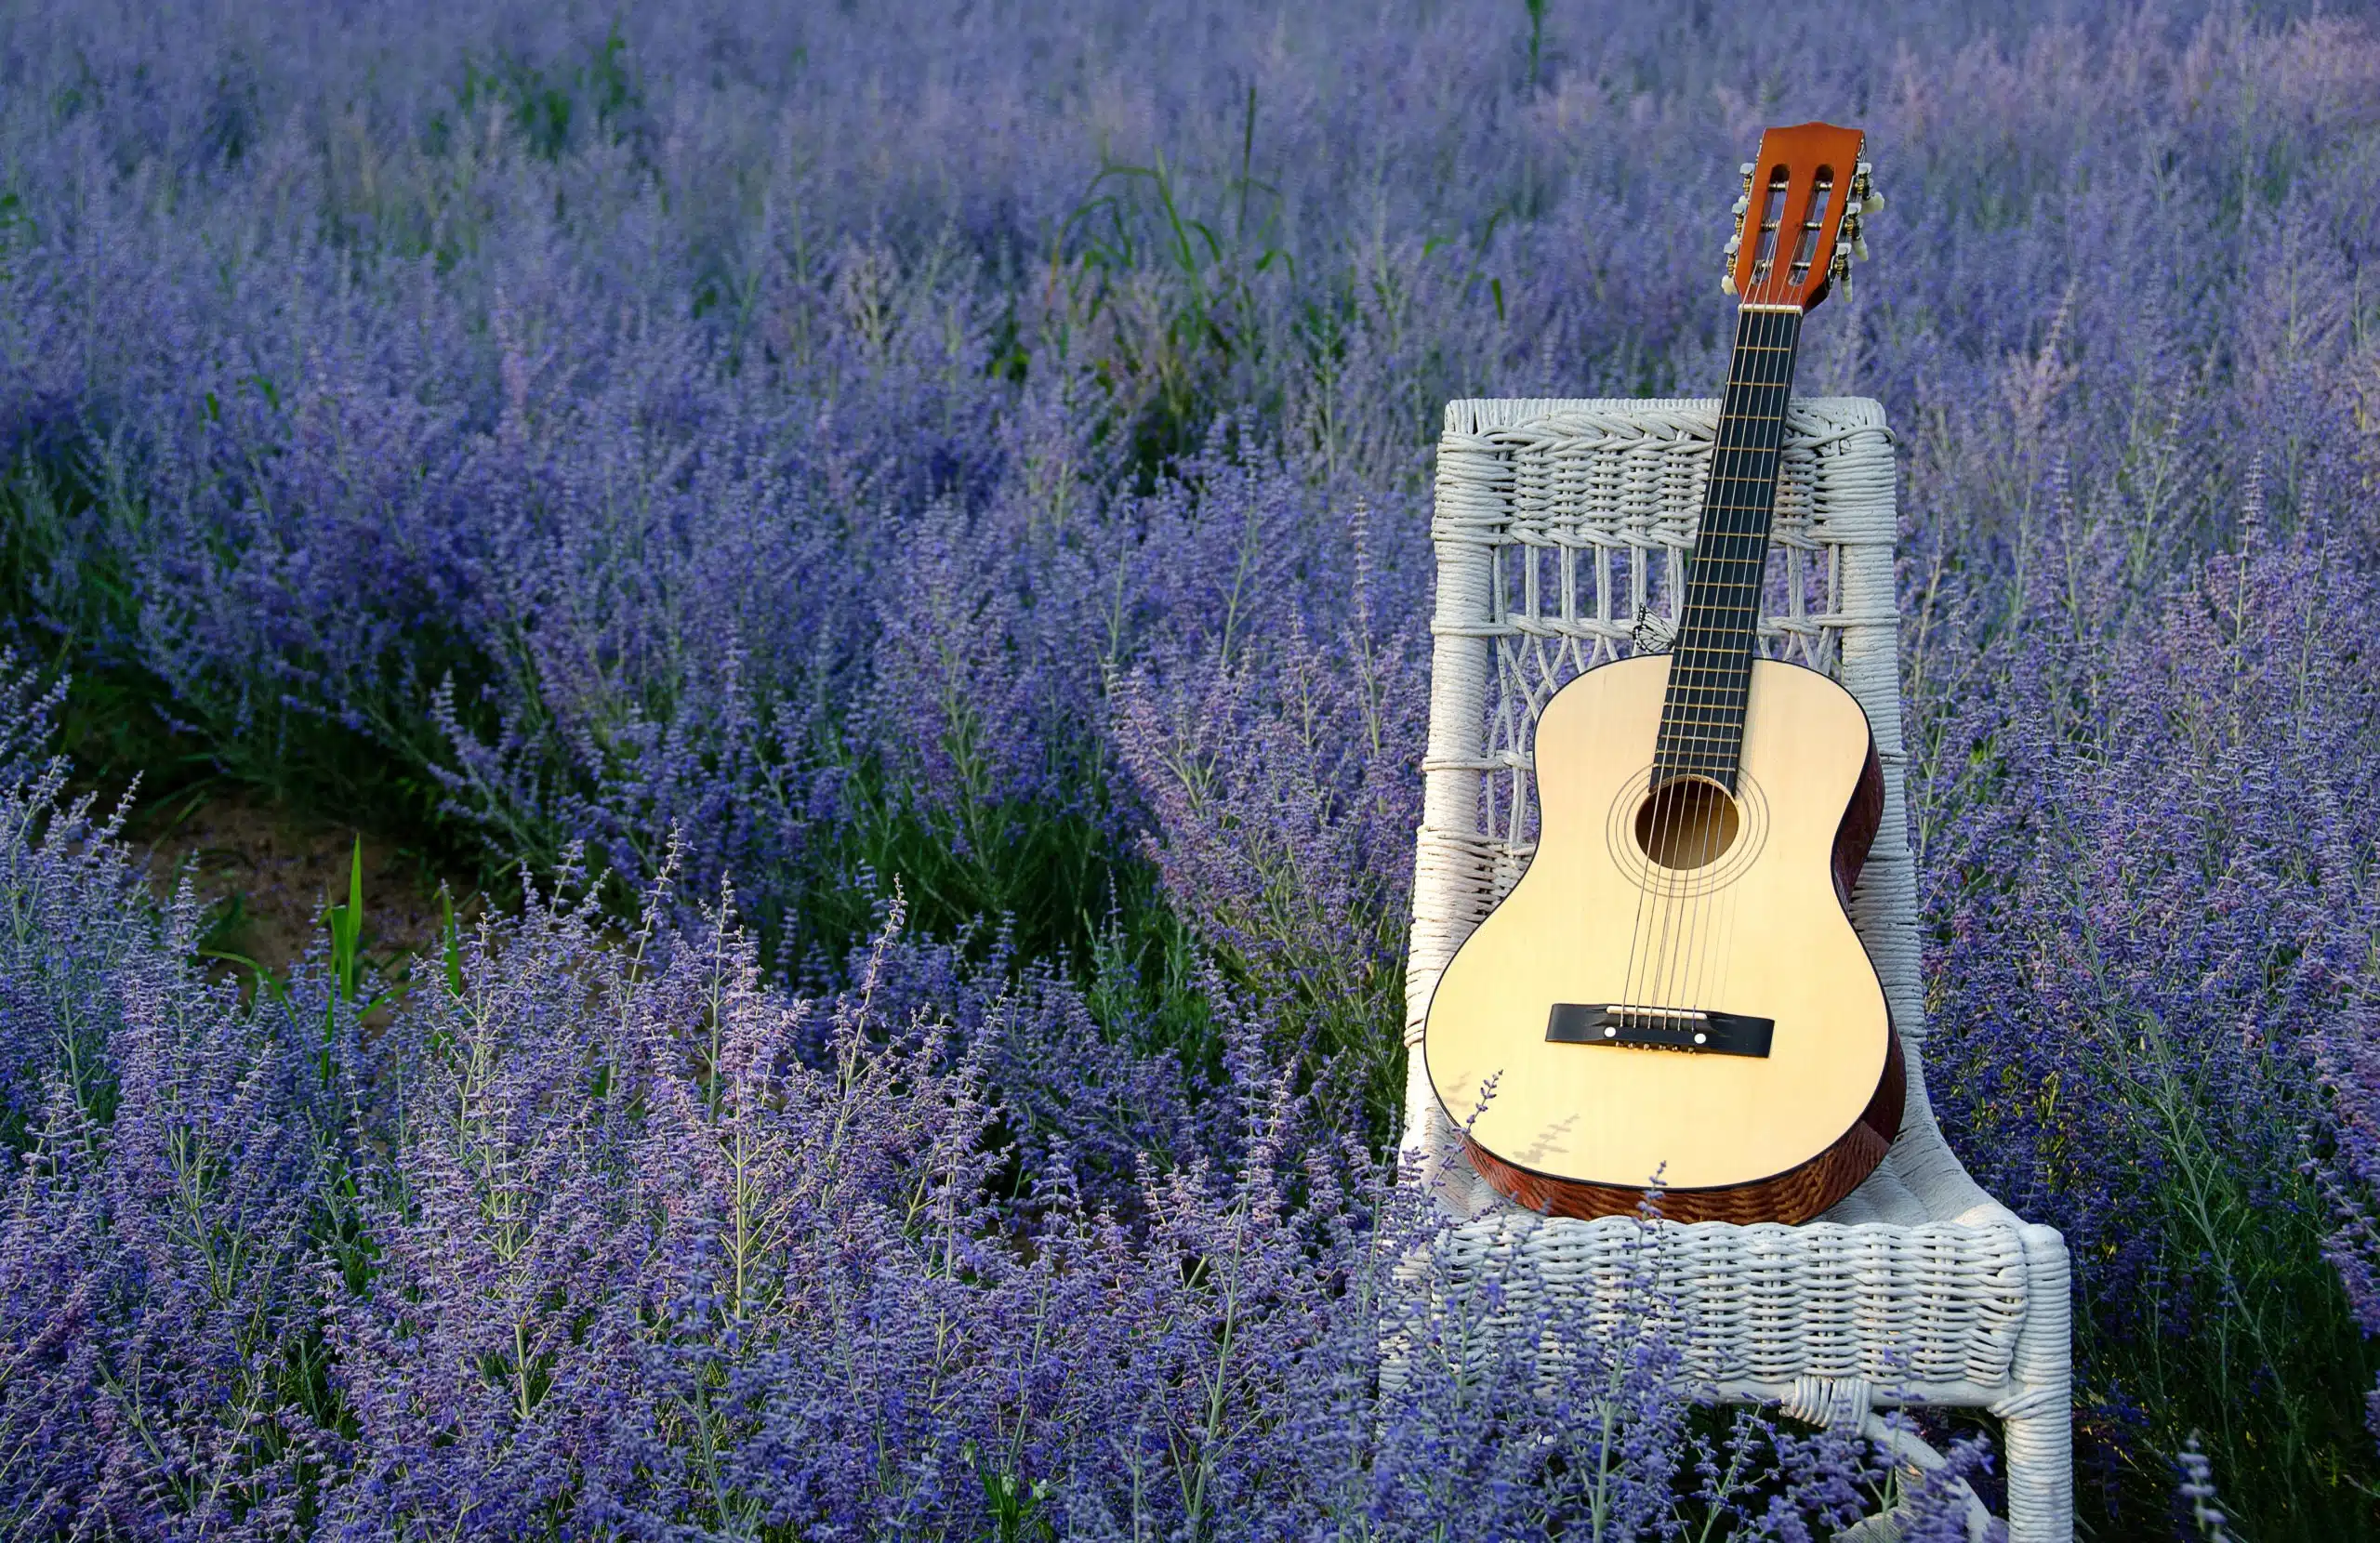 Six string guitar on white wicker chair in purple Russian Sage flowers